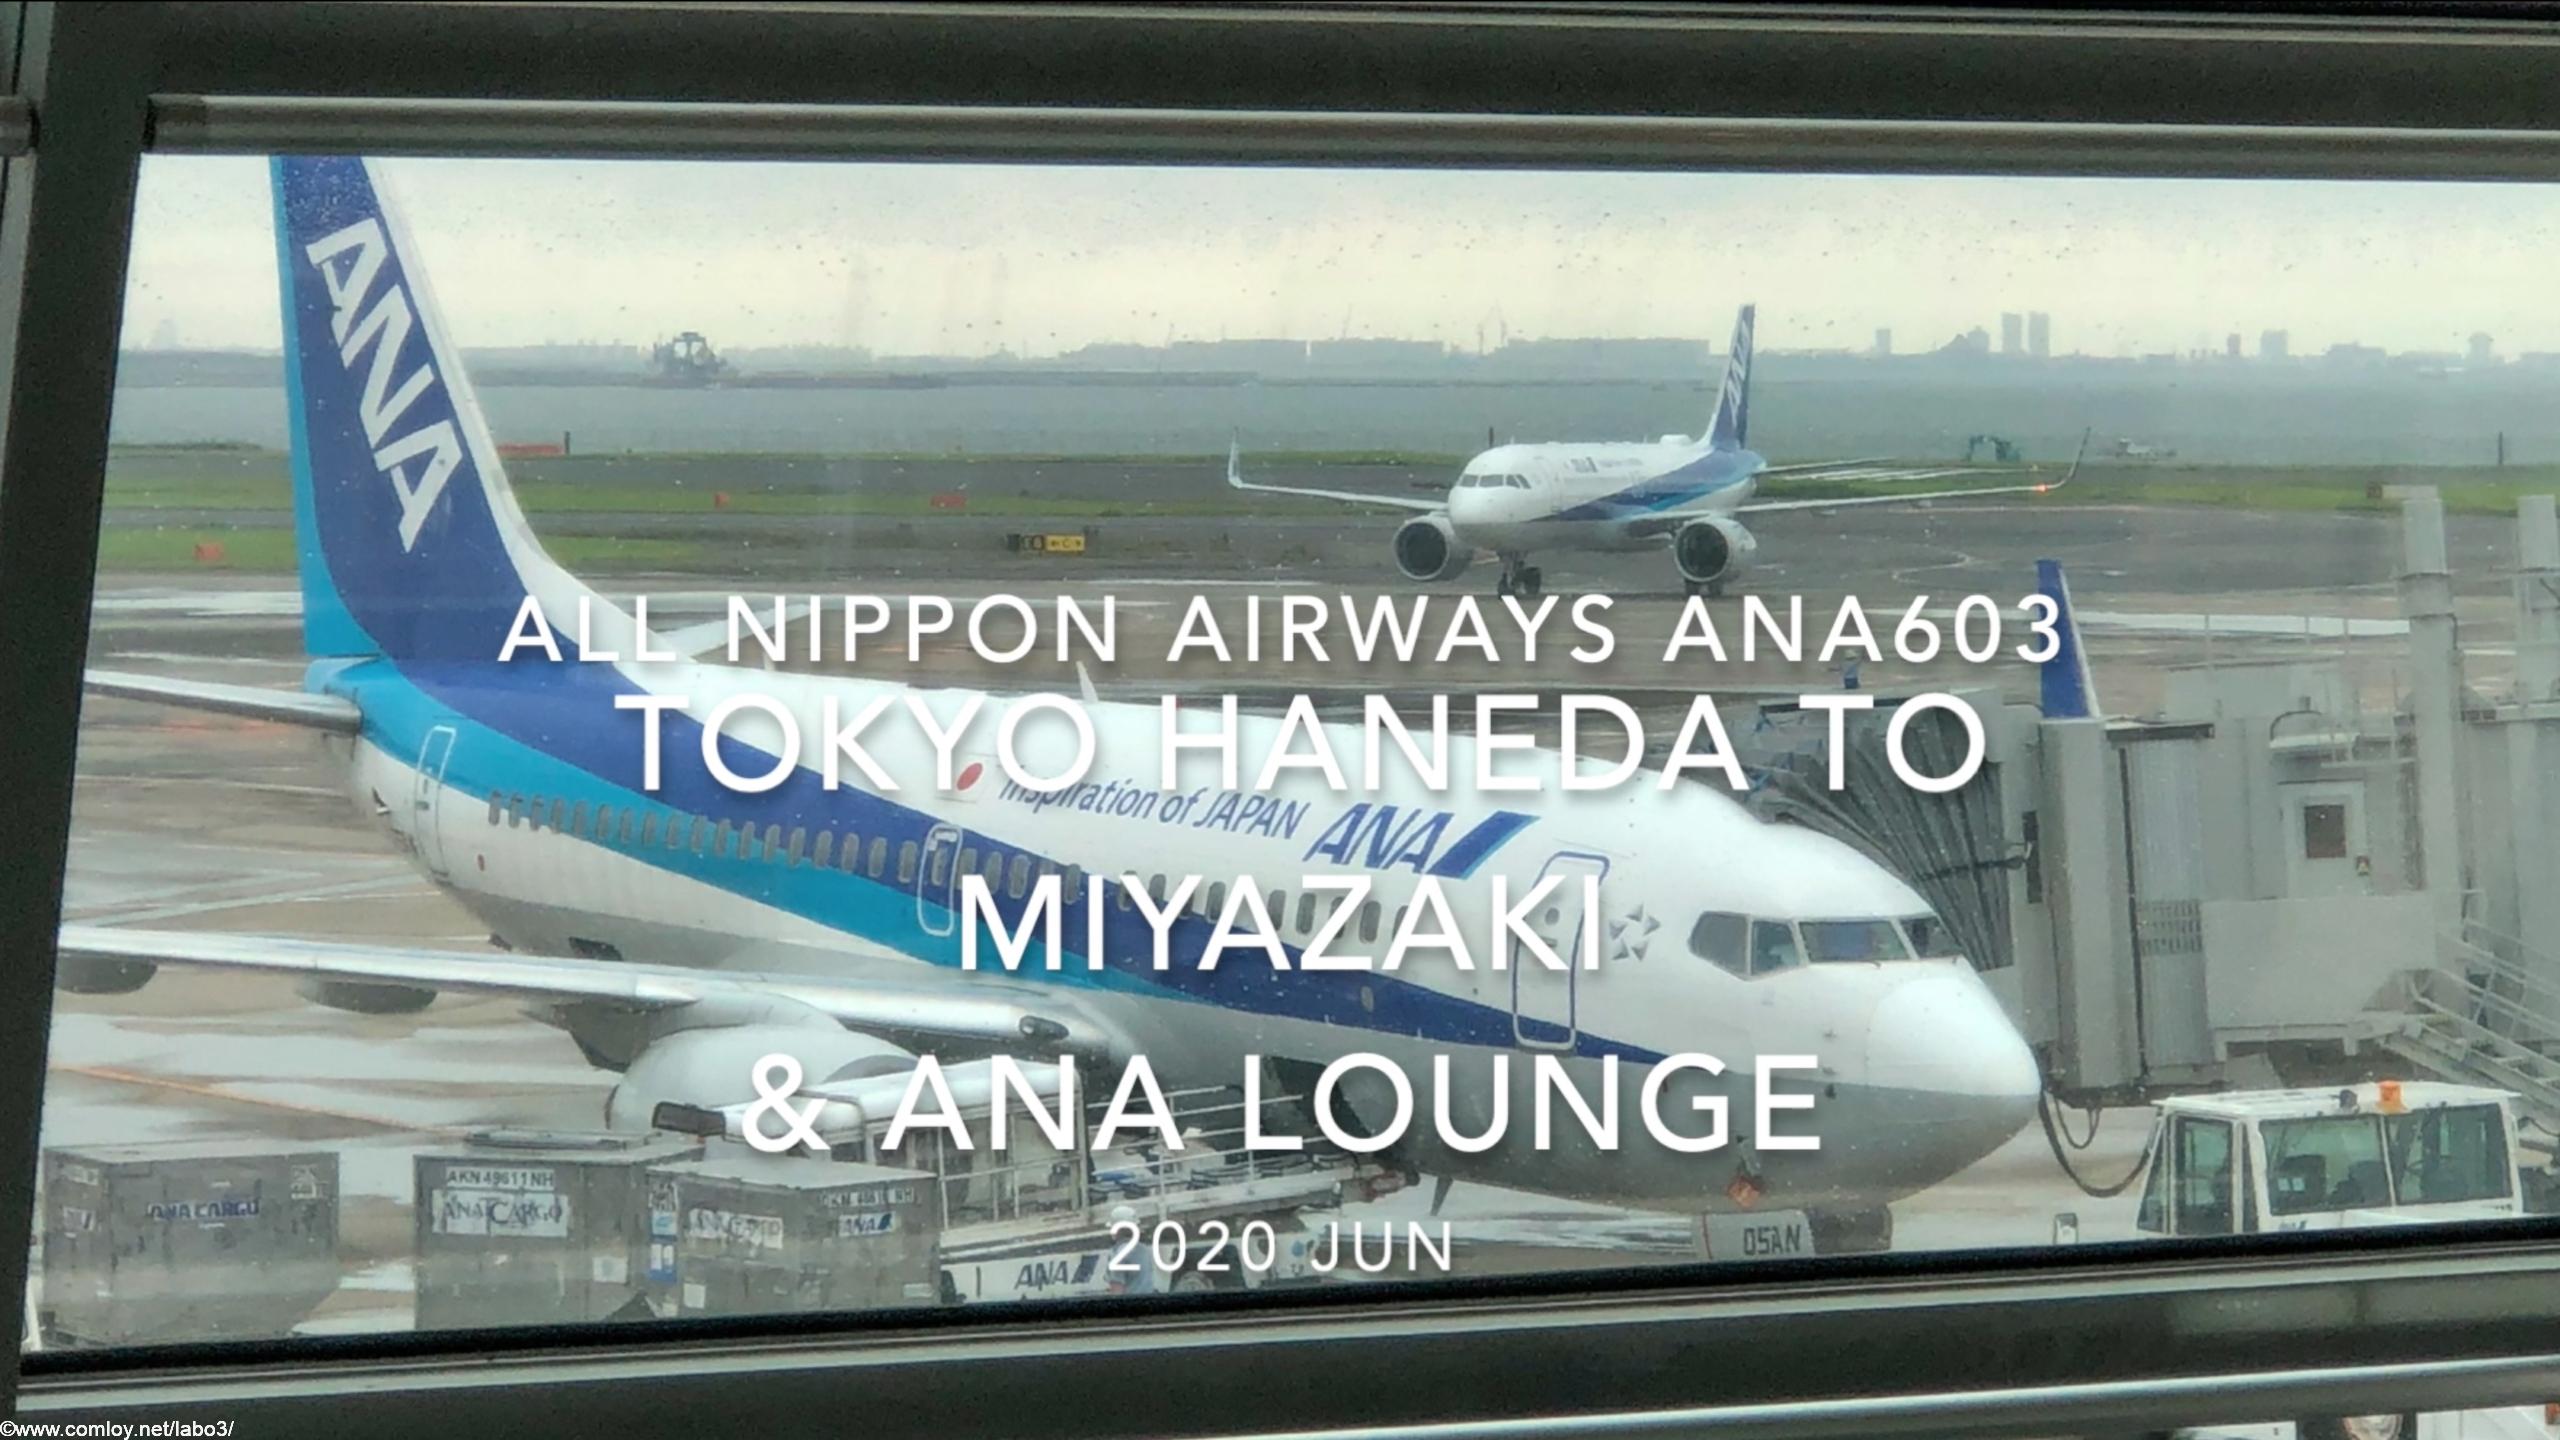 【Flight Report】2020 JUN All Nippon Airways ANA603 HANEDA TO MIYAZAKI and ANA LOUNGE 全日空 羽田 - 宮崎 搭乗記